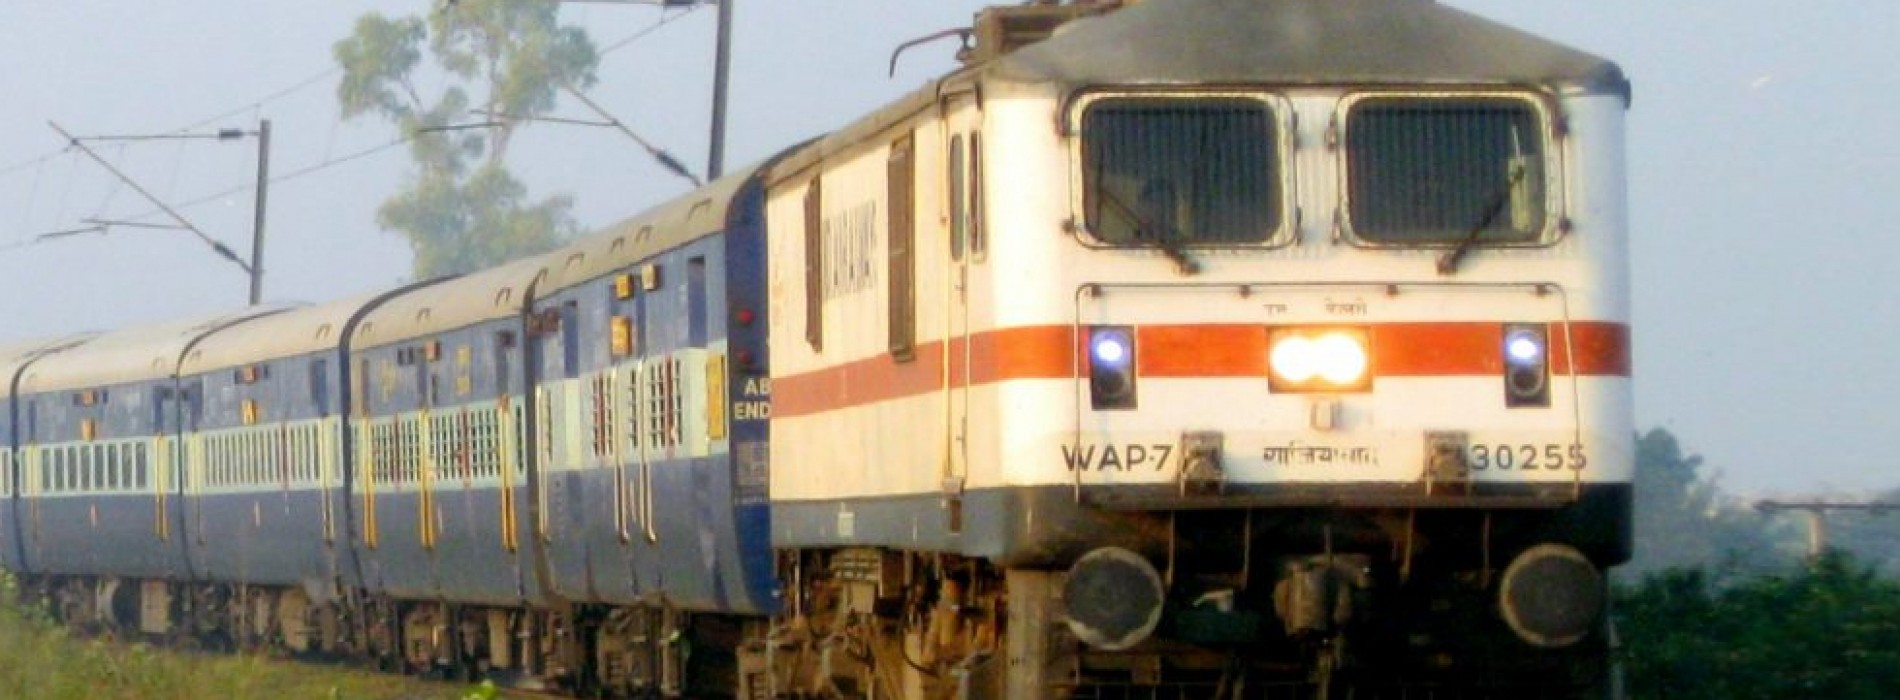 Nagpur-Hyderabad train travel to take 3 hours